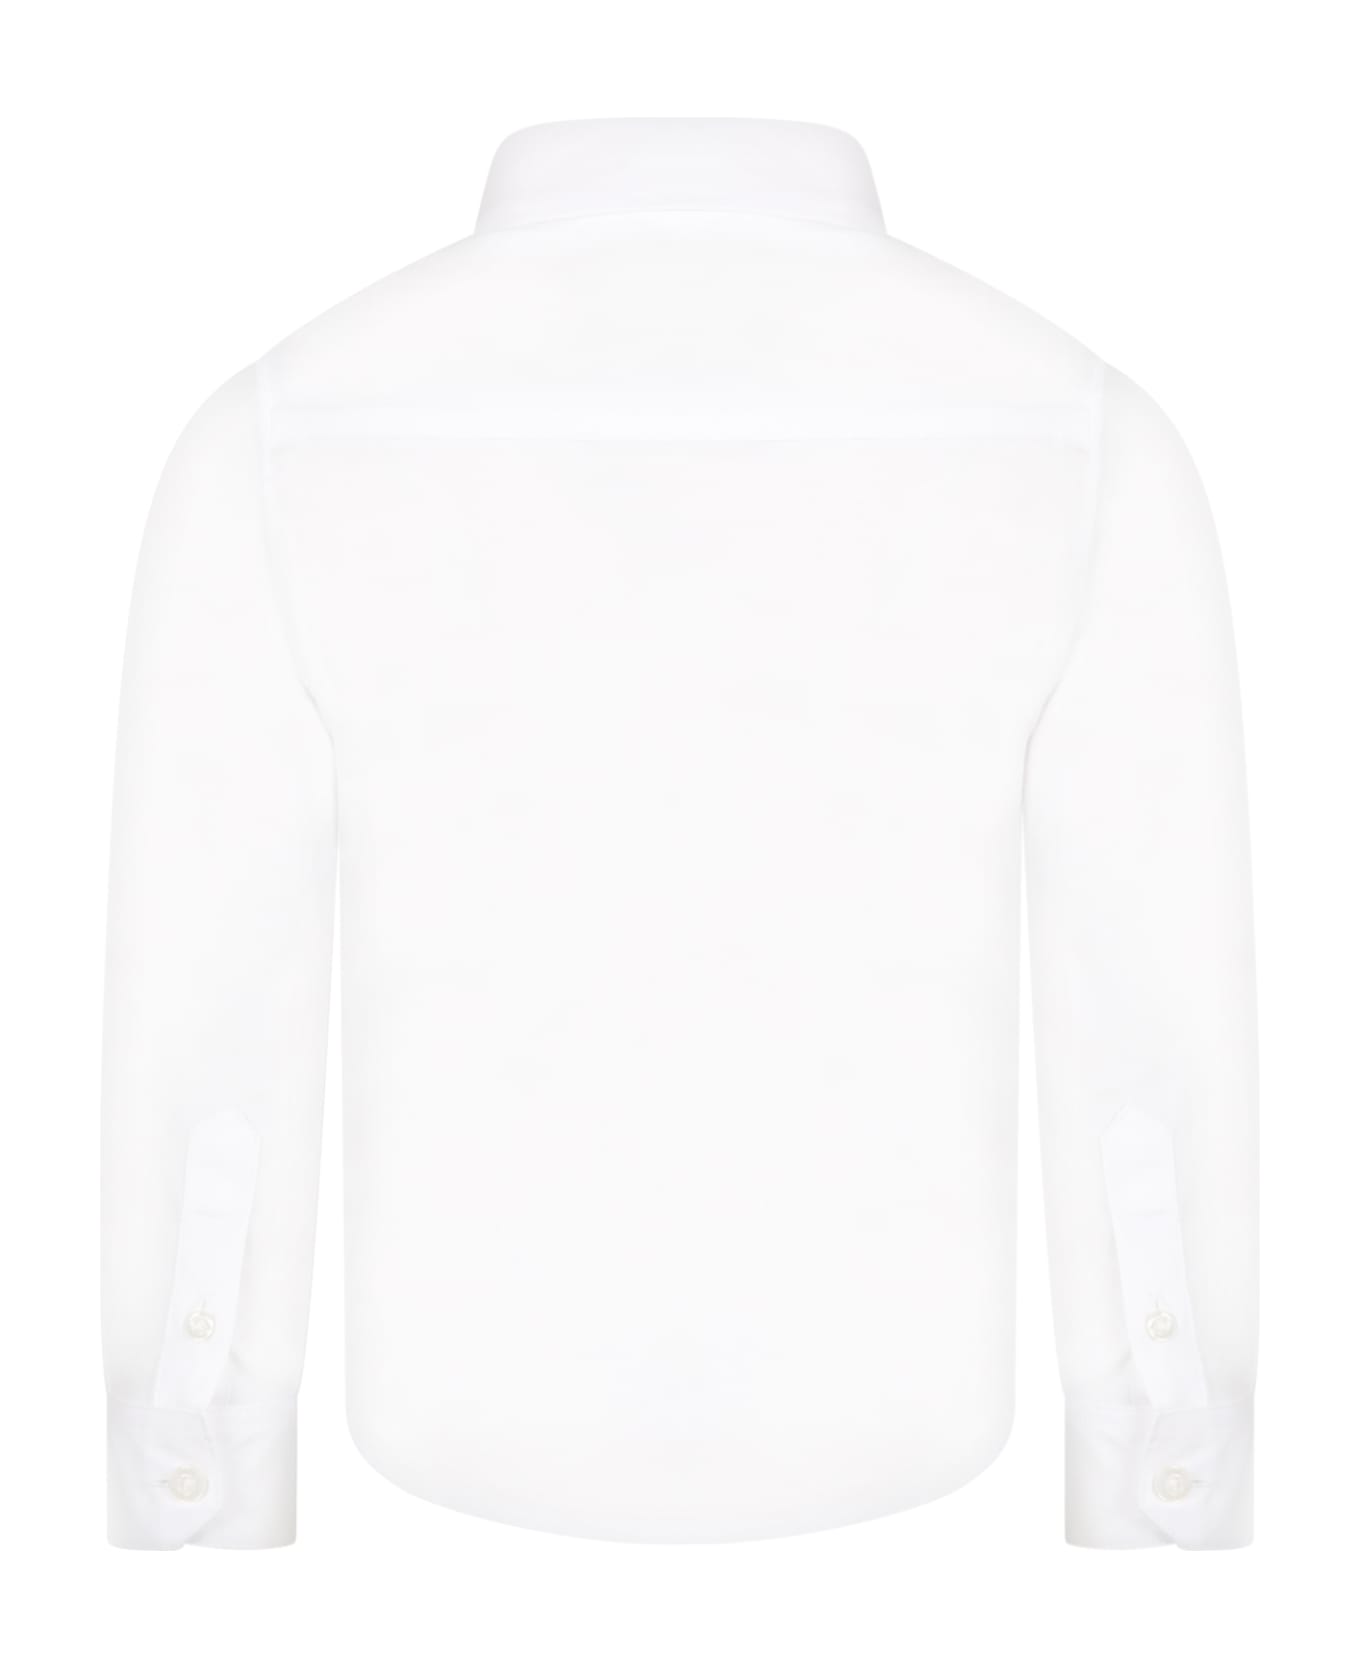 Hugo Boss White Shirt For Boy With Logo - White